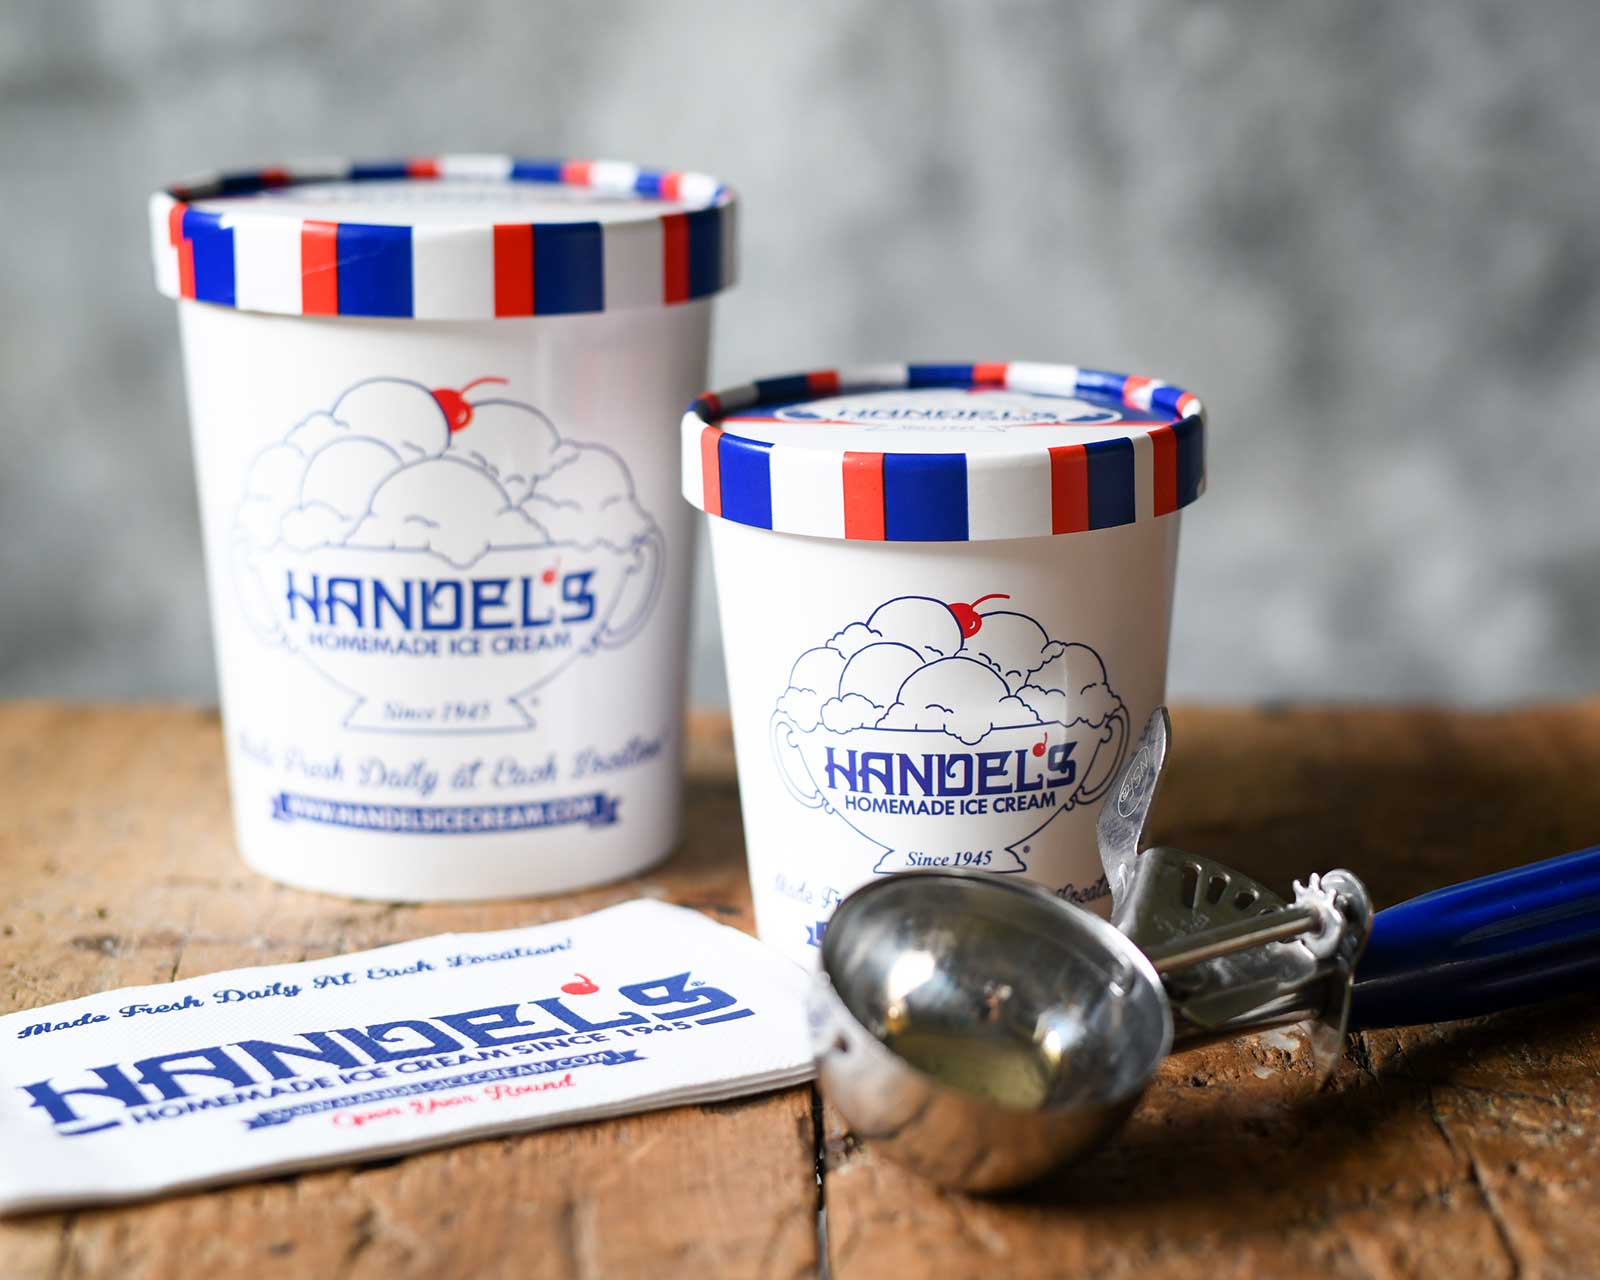 Handel's pints and ice cream scoop